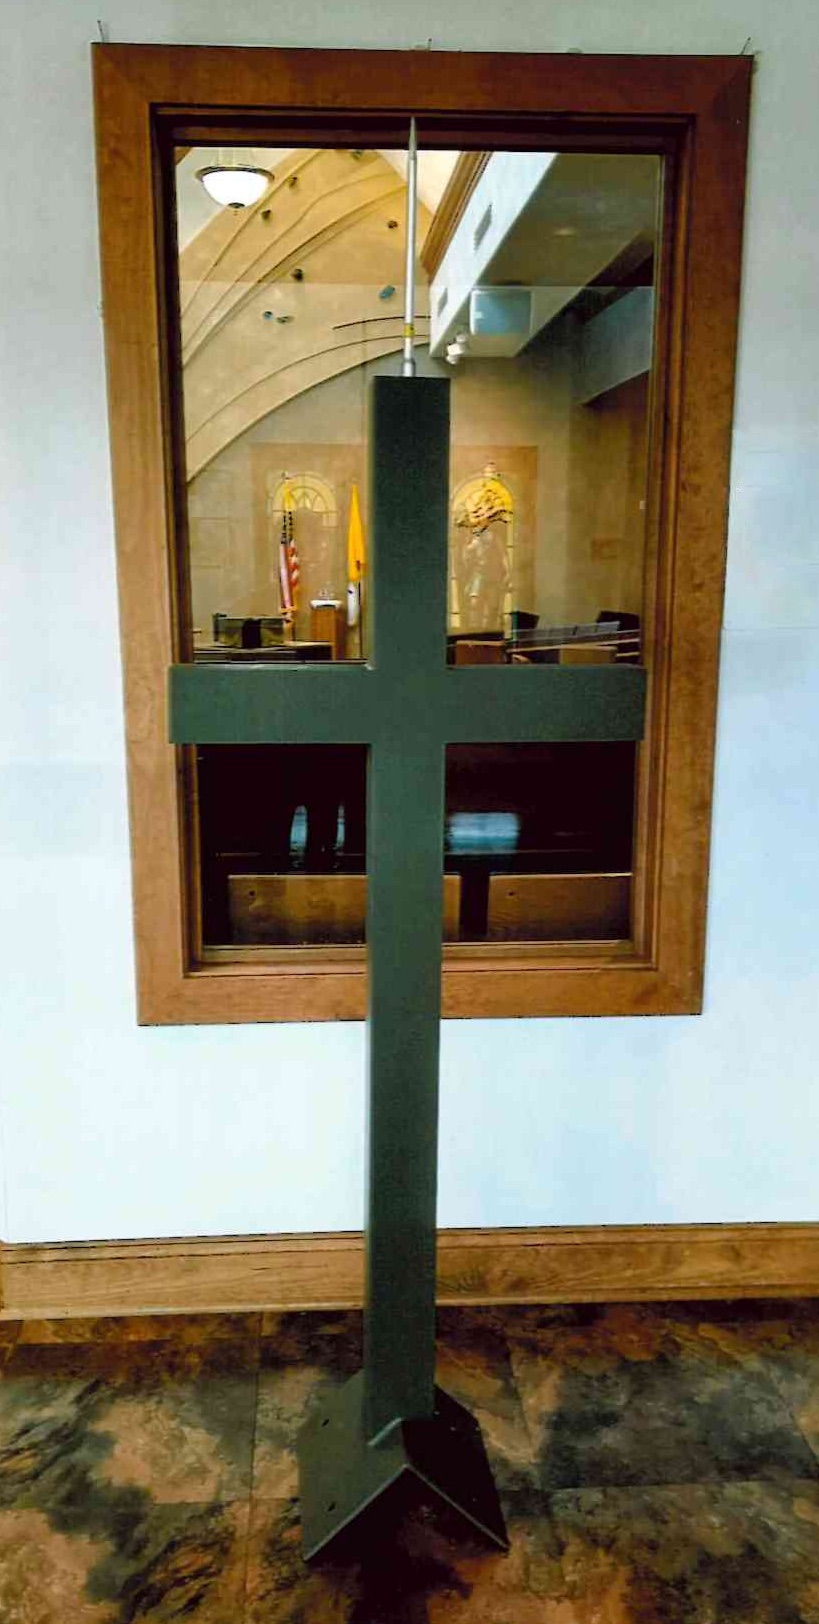 The new cross